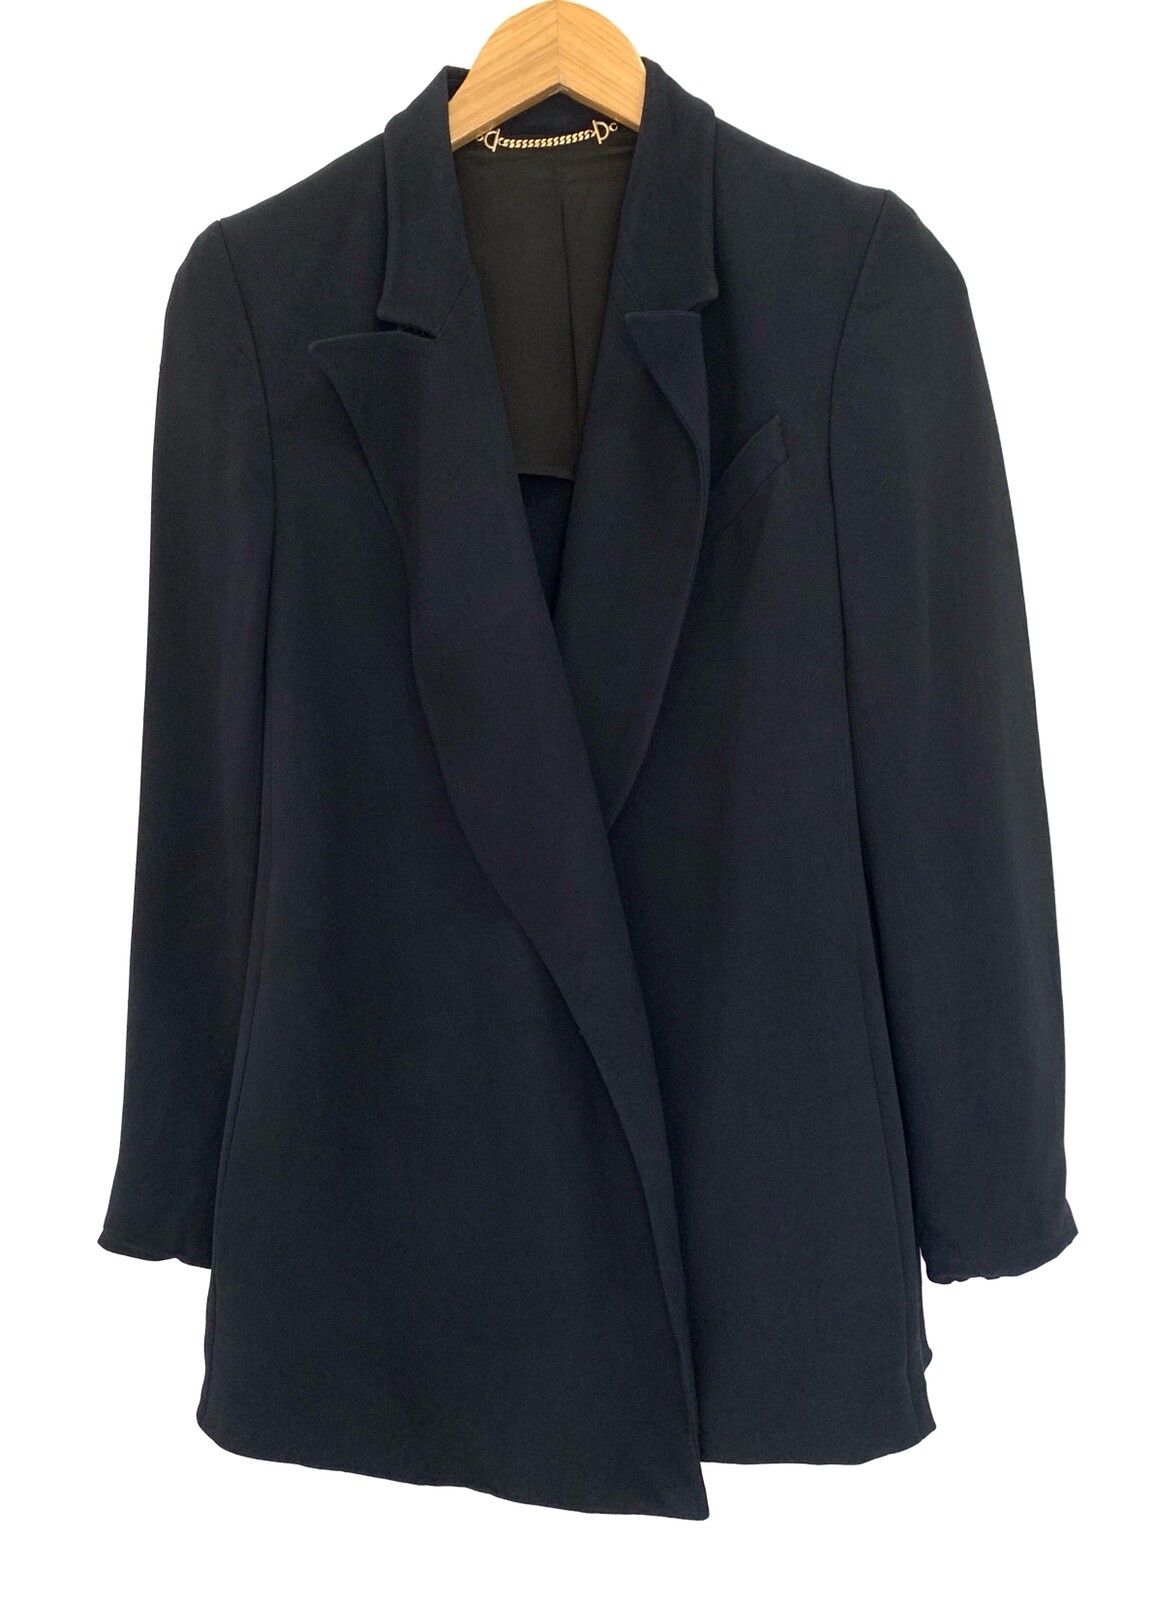 Gucci GUCCI Black Cardigan Blazer Jacket Size US S / EU 44-46 / 1 - 2 Preview